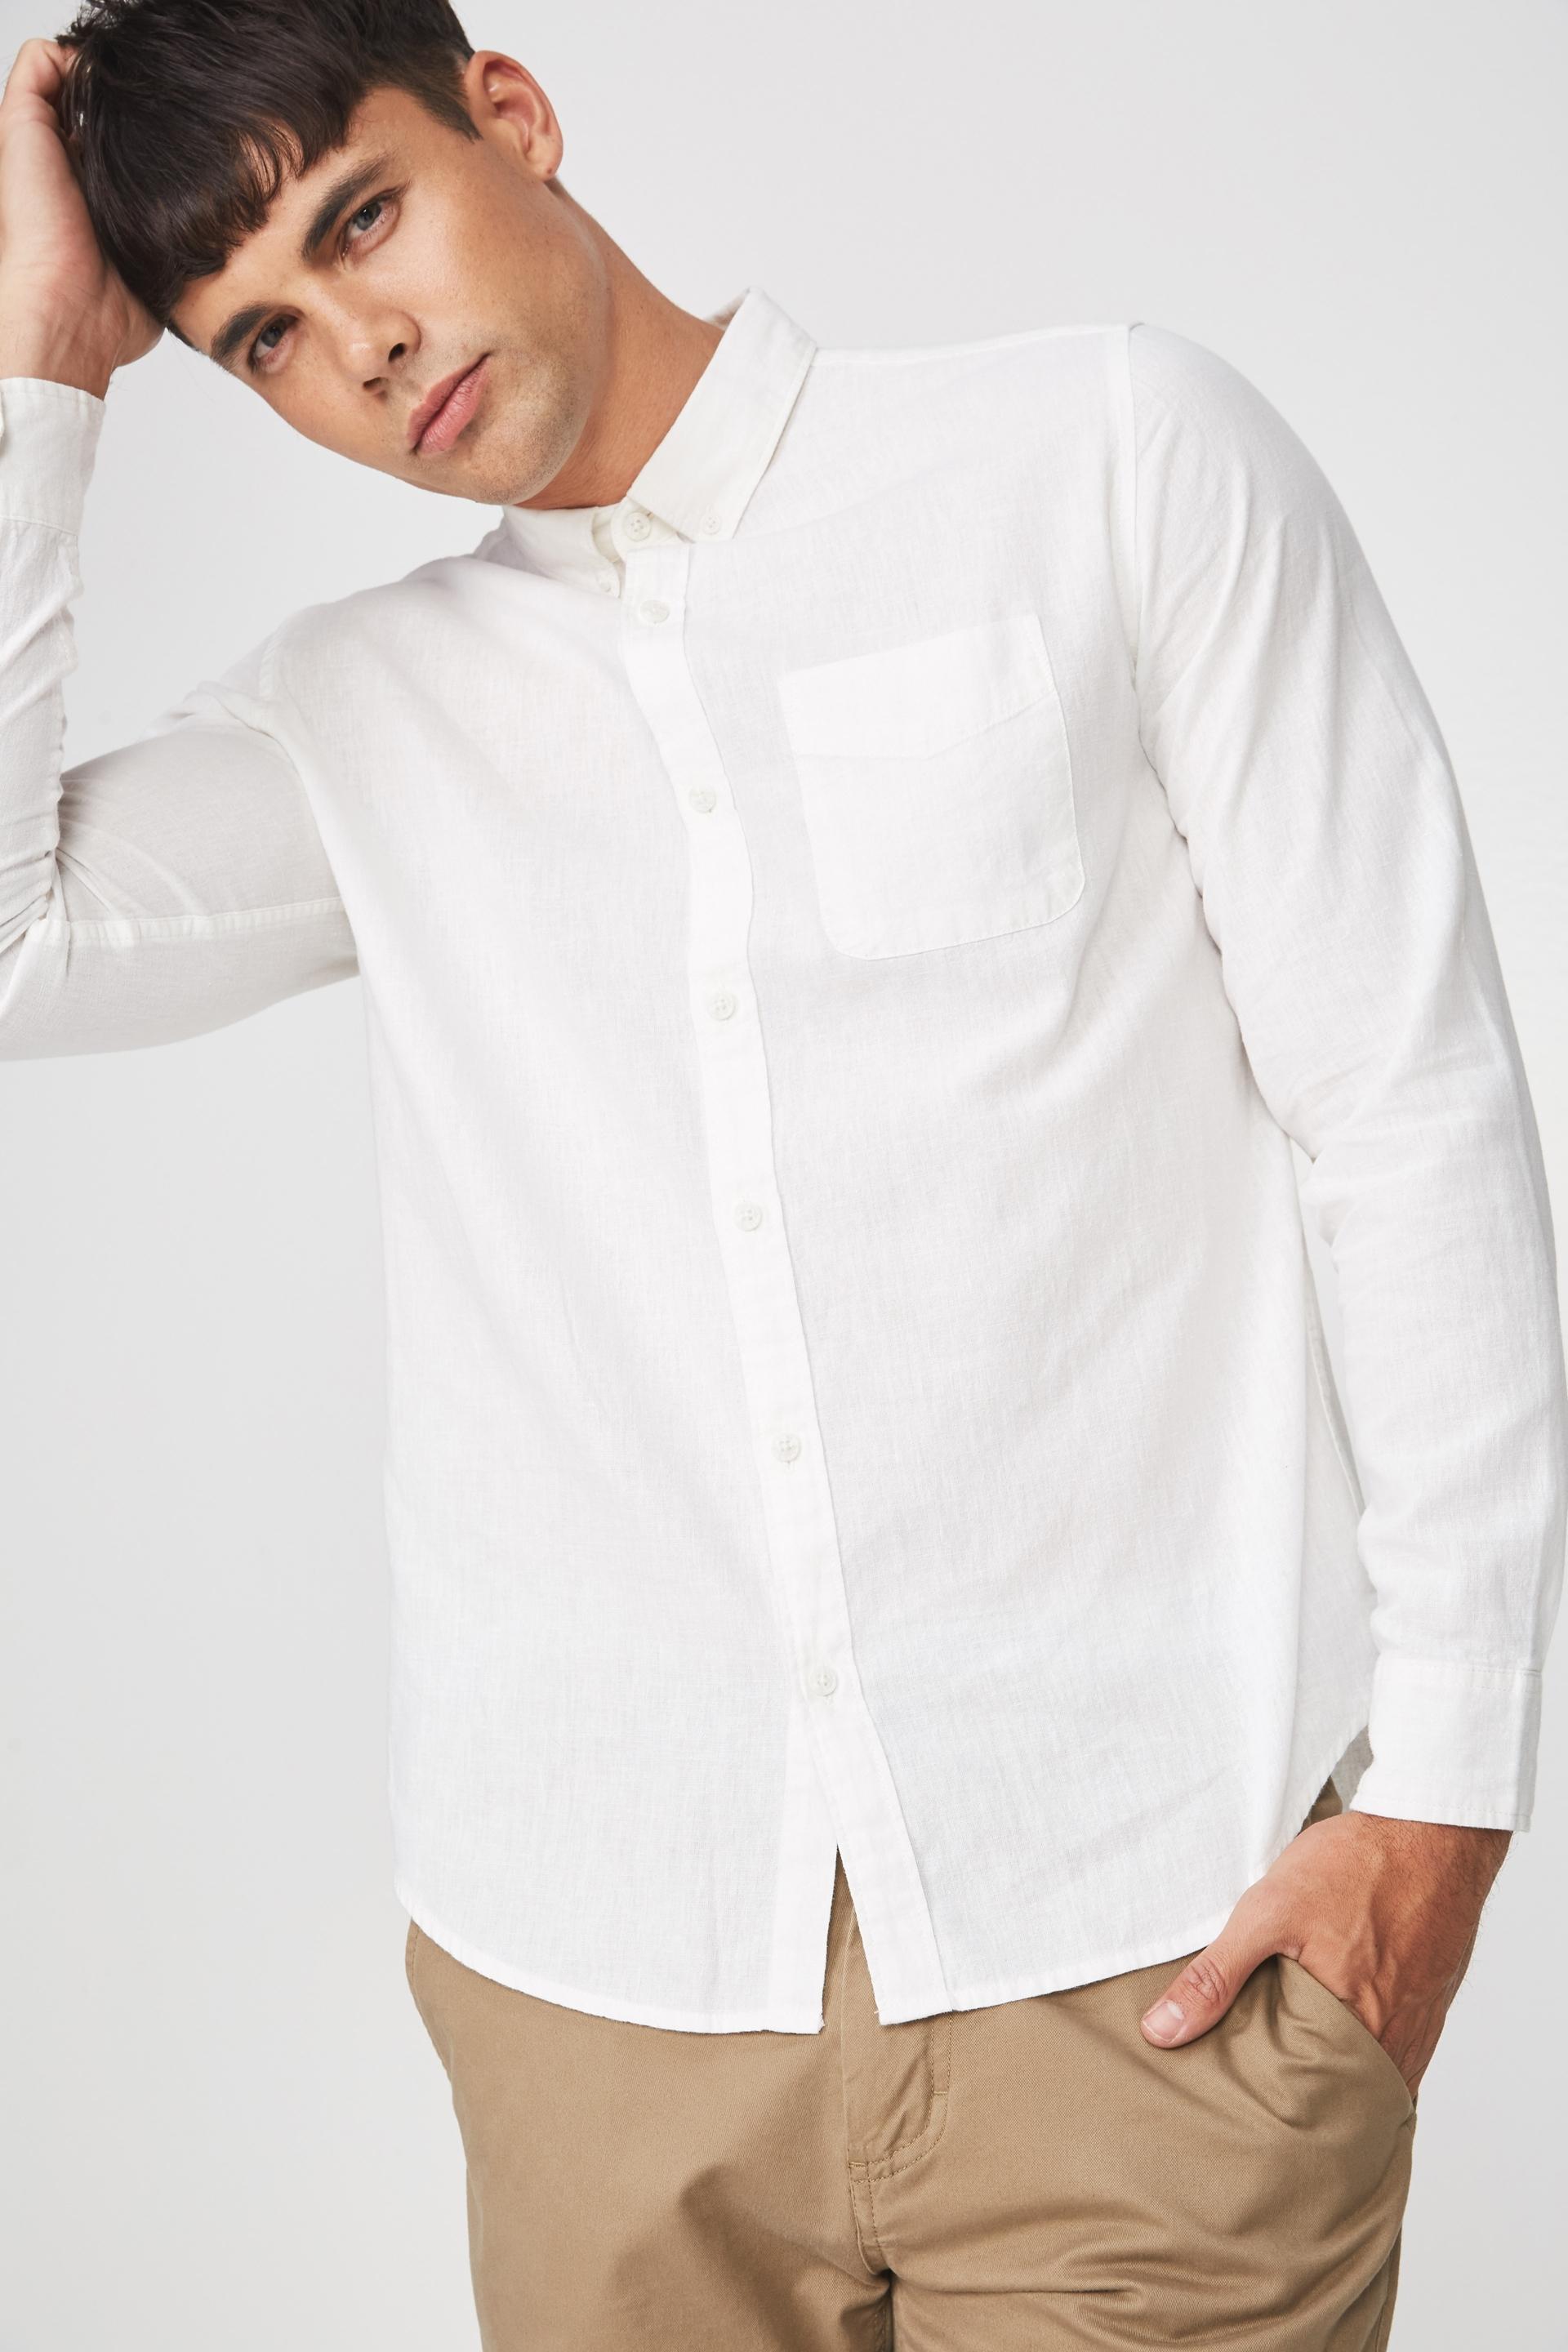 Premium linen cotton long sleeve shirt - white Cotton On Shirts ...